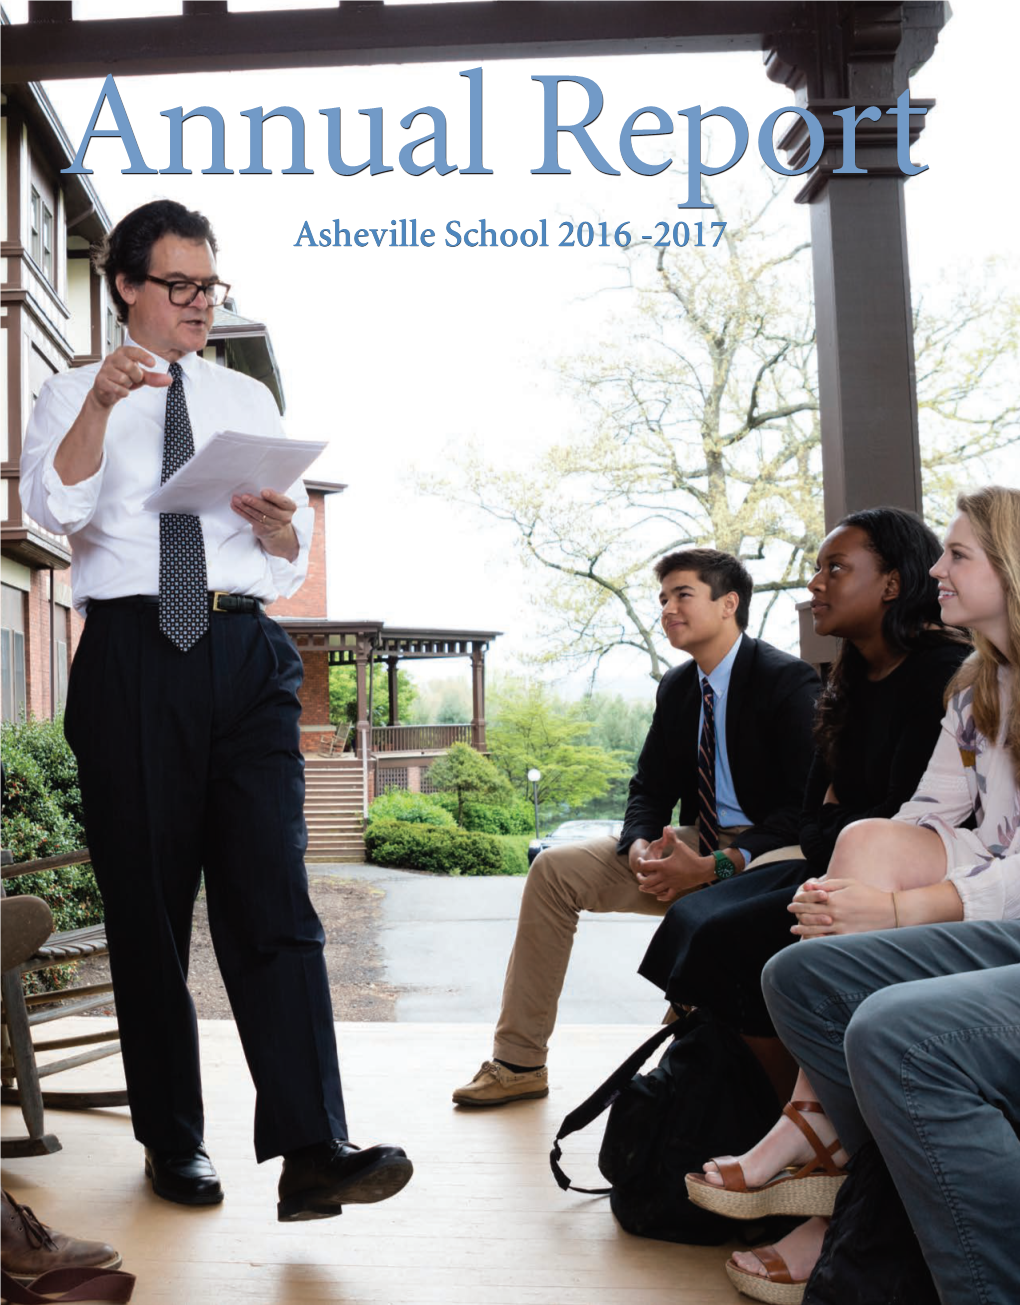 2017 Annual Report 2016 - 2017